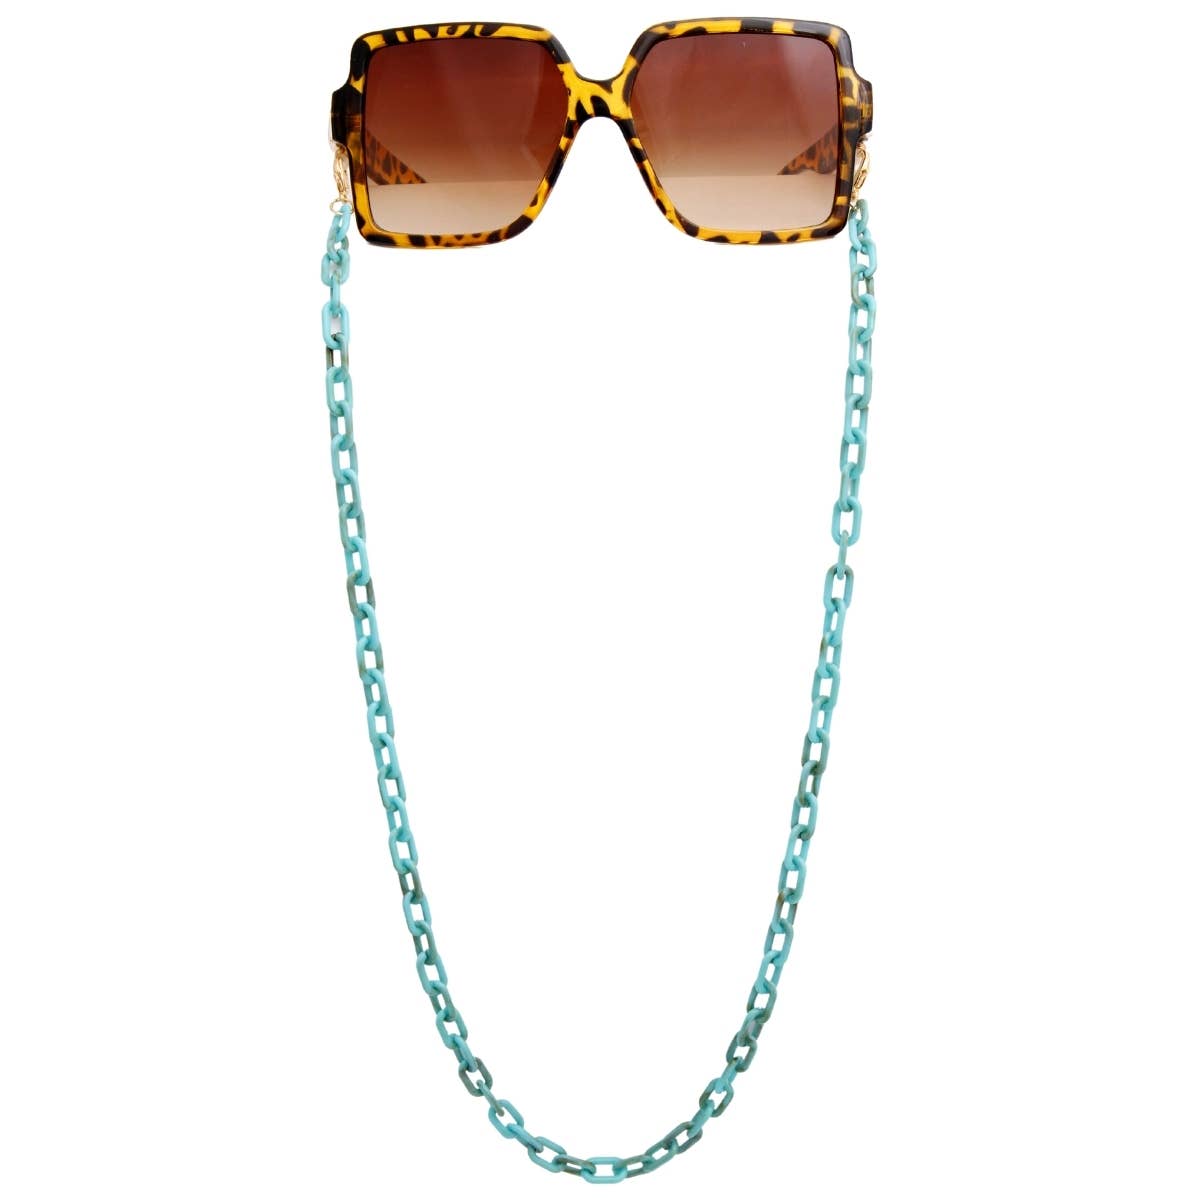 Sunglasses chain Schmuck Ketten Statementketten 